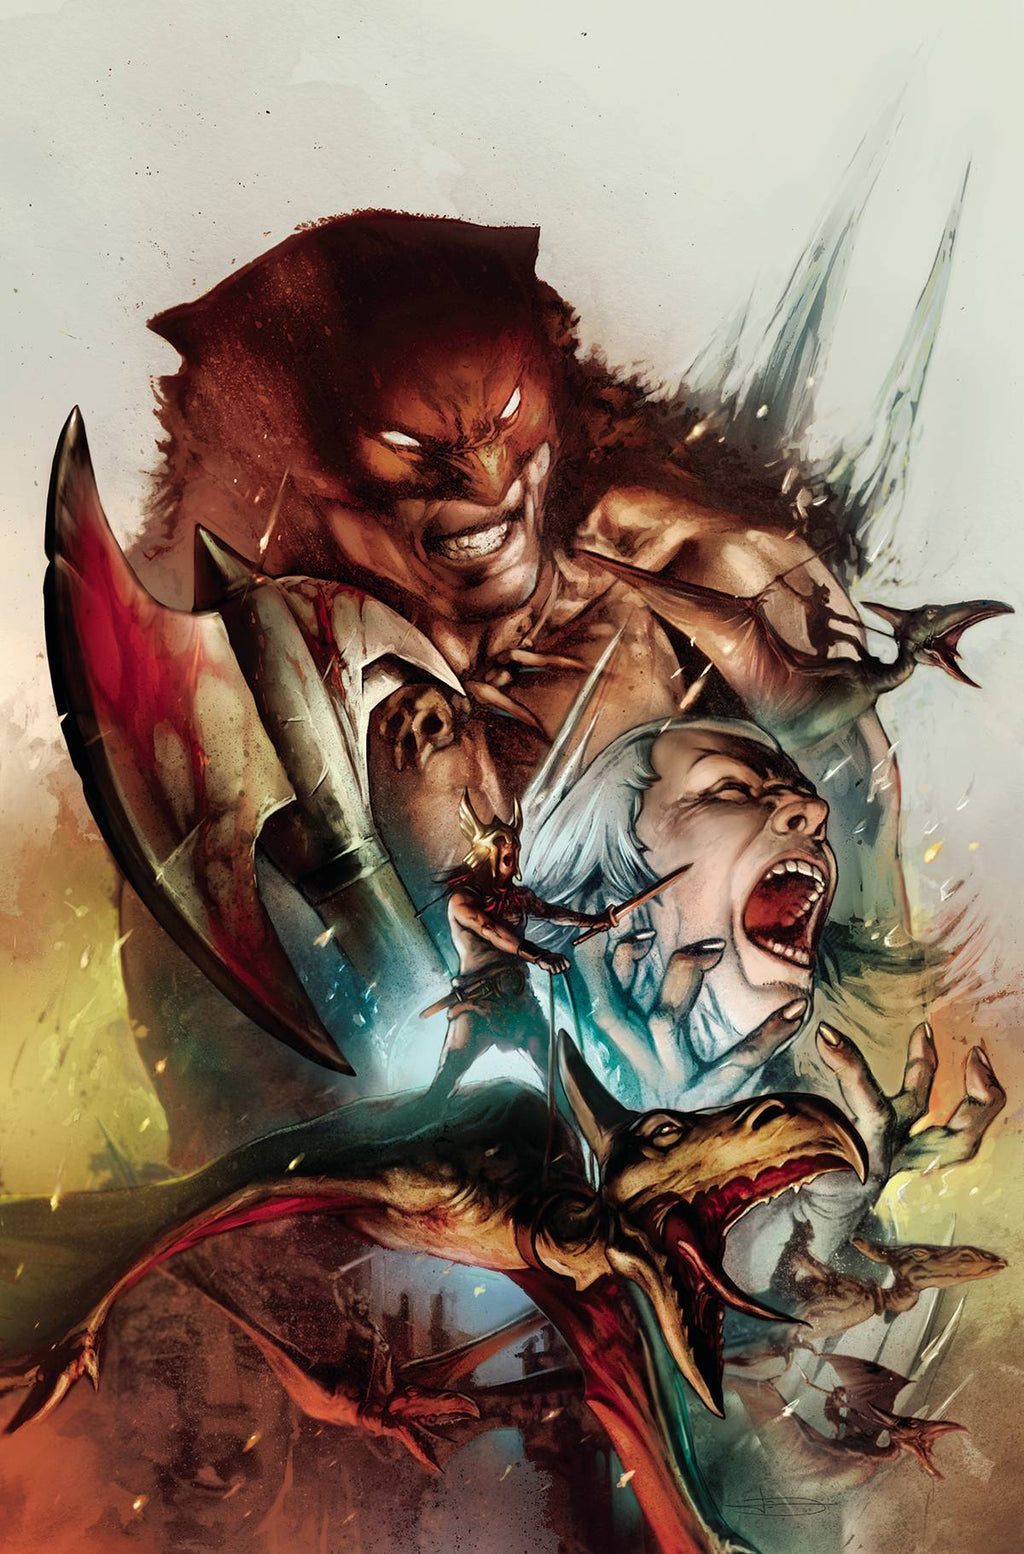 Dante's Inferno #1 (2010)  Comic Books - Modern Age, Wildstorm / HipComic